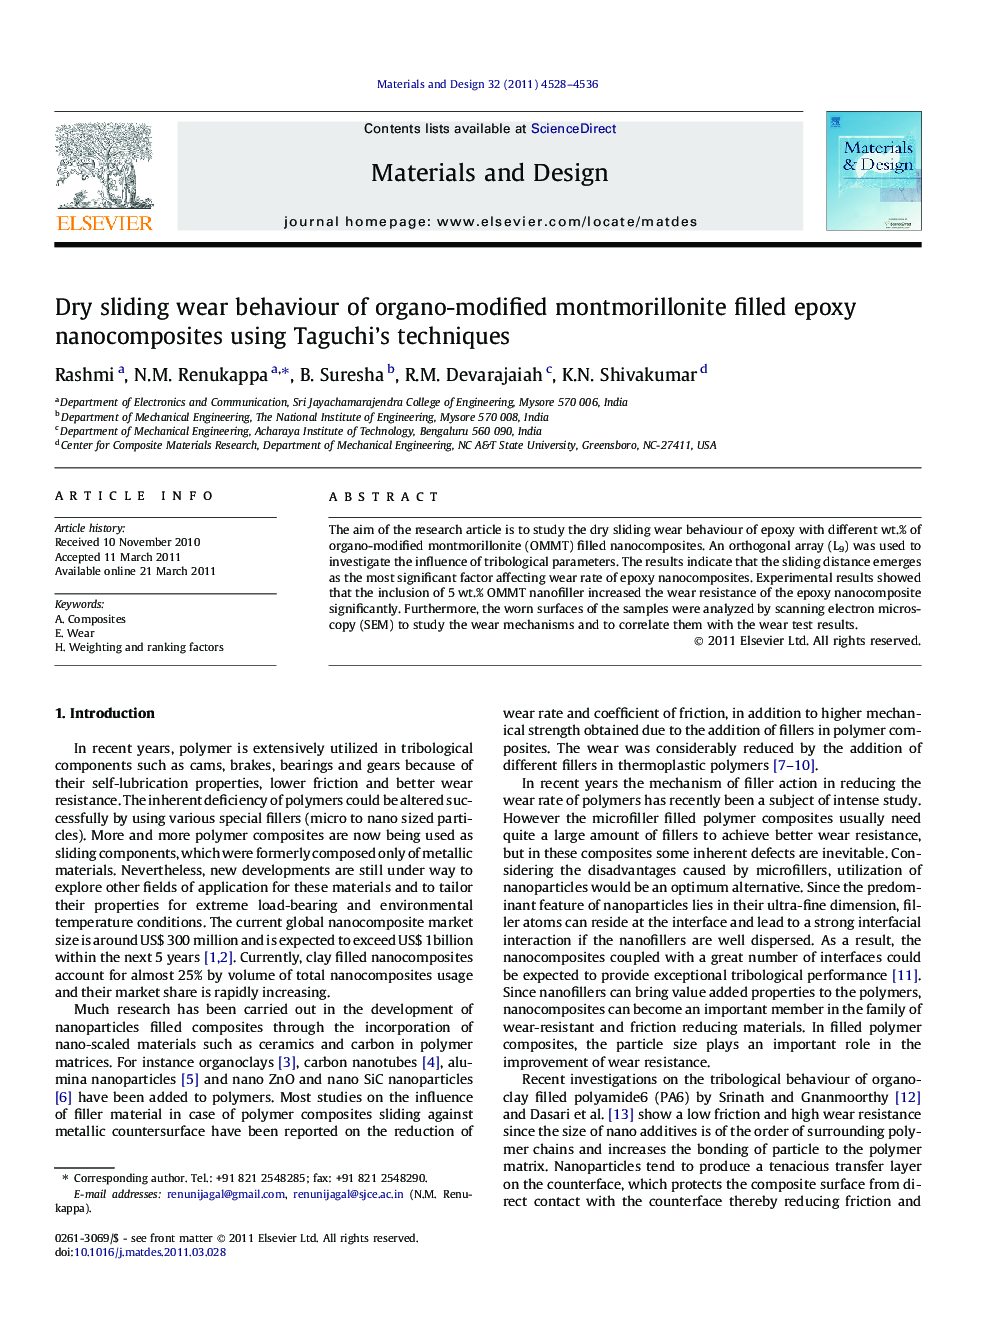 Dry sliding wear behaviour of organo-modified montmorillonite filled epoxy nanocomposites using Taguchi’s techniques